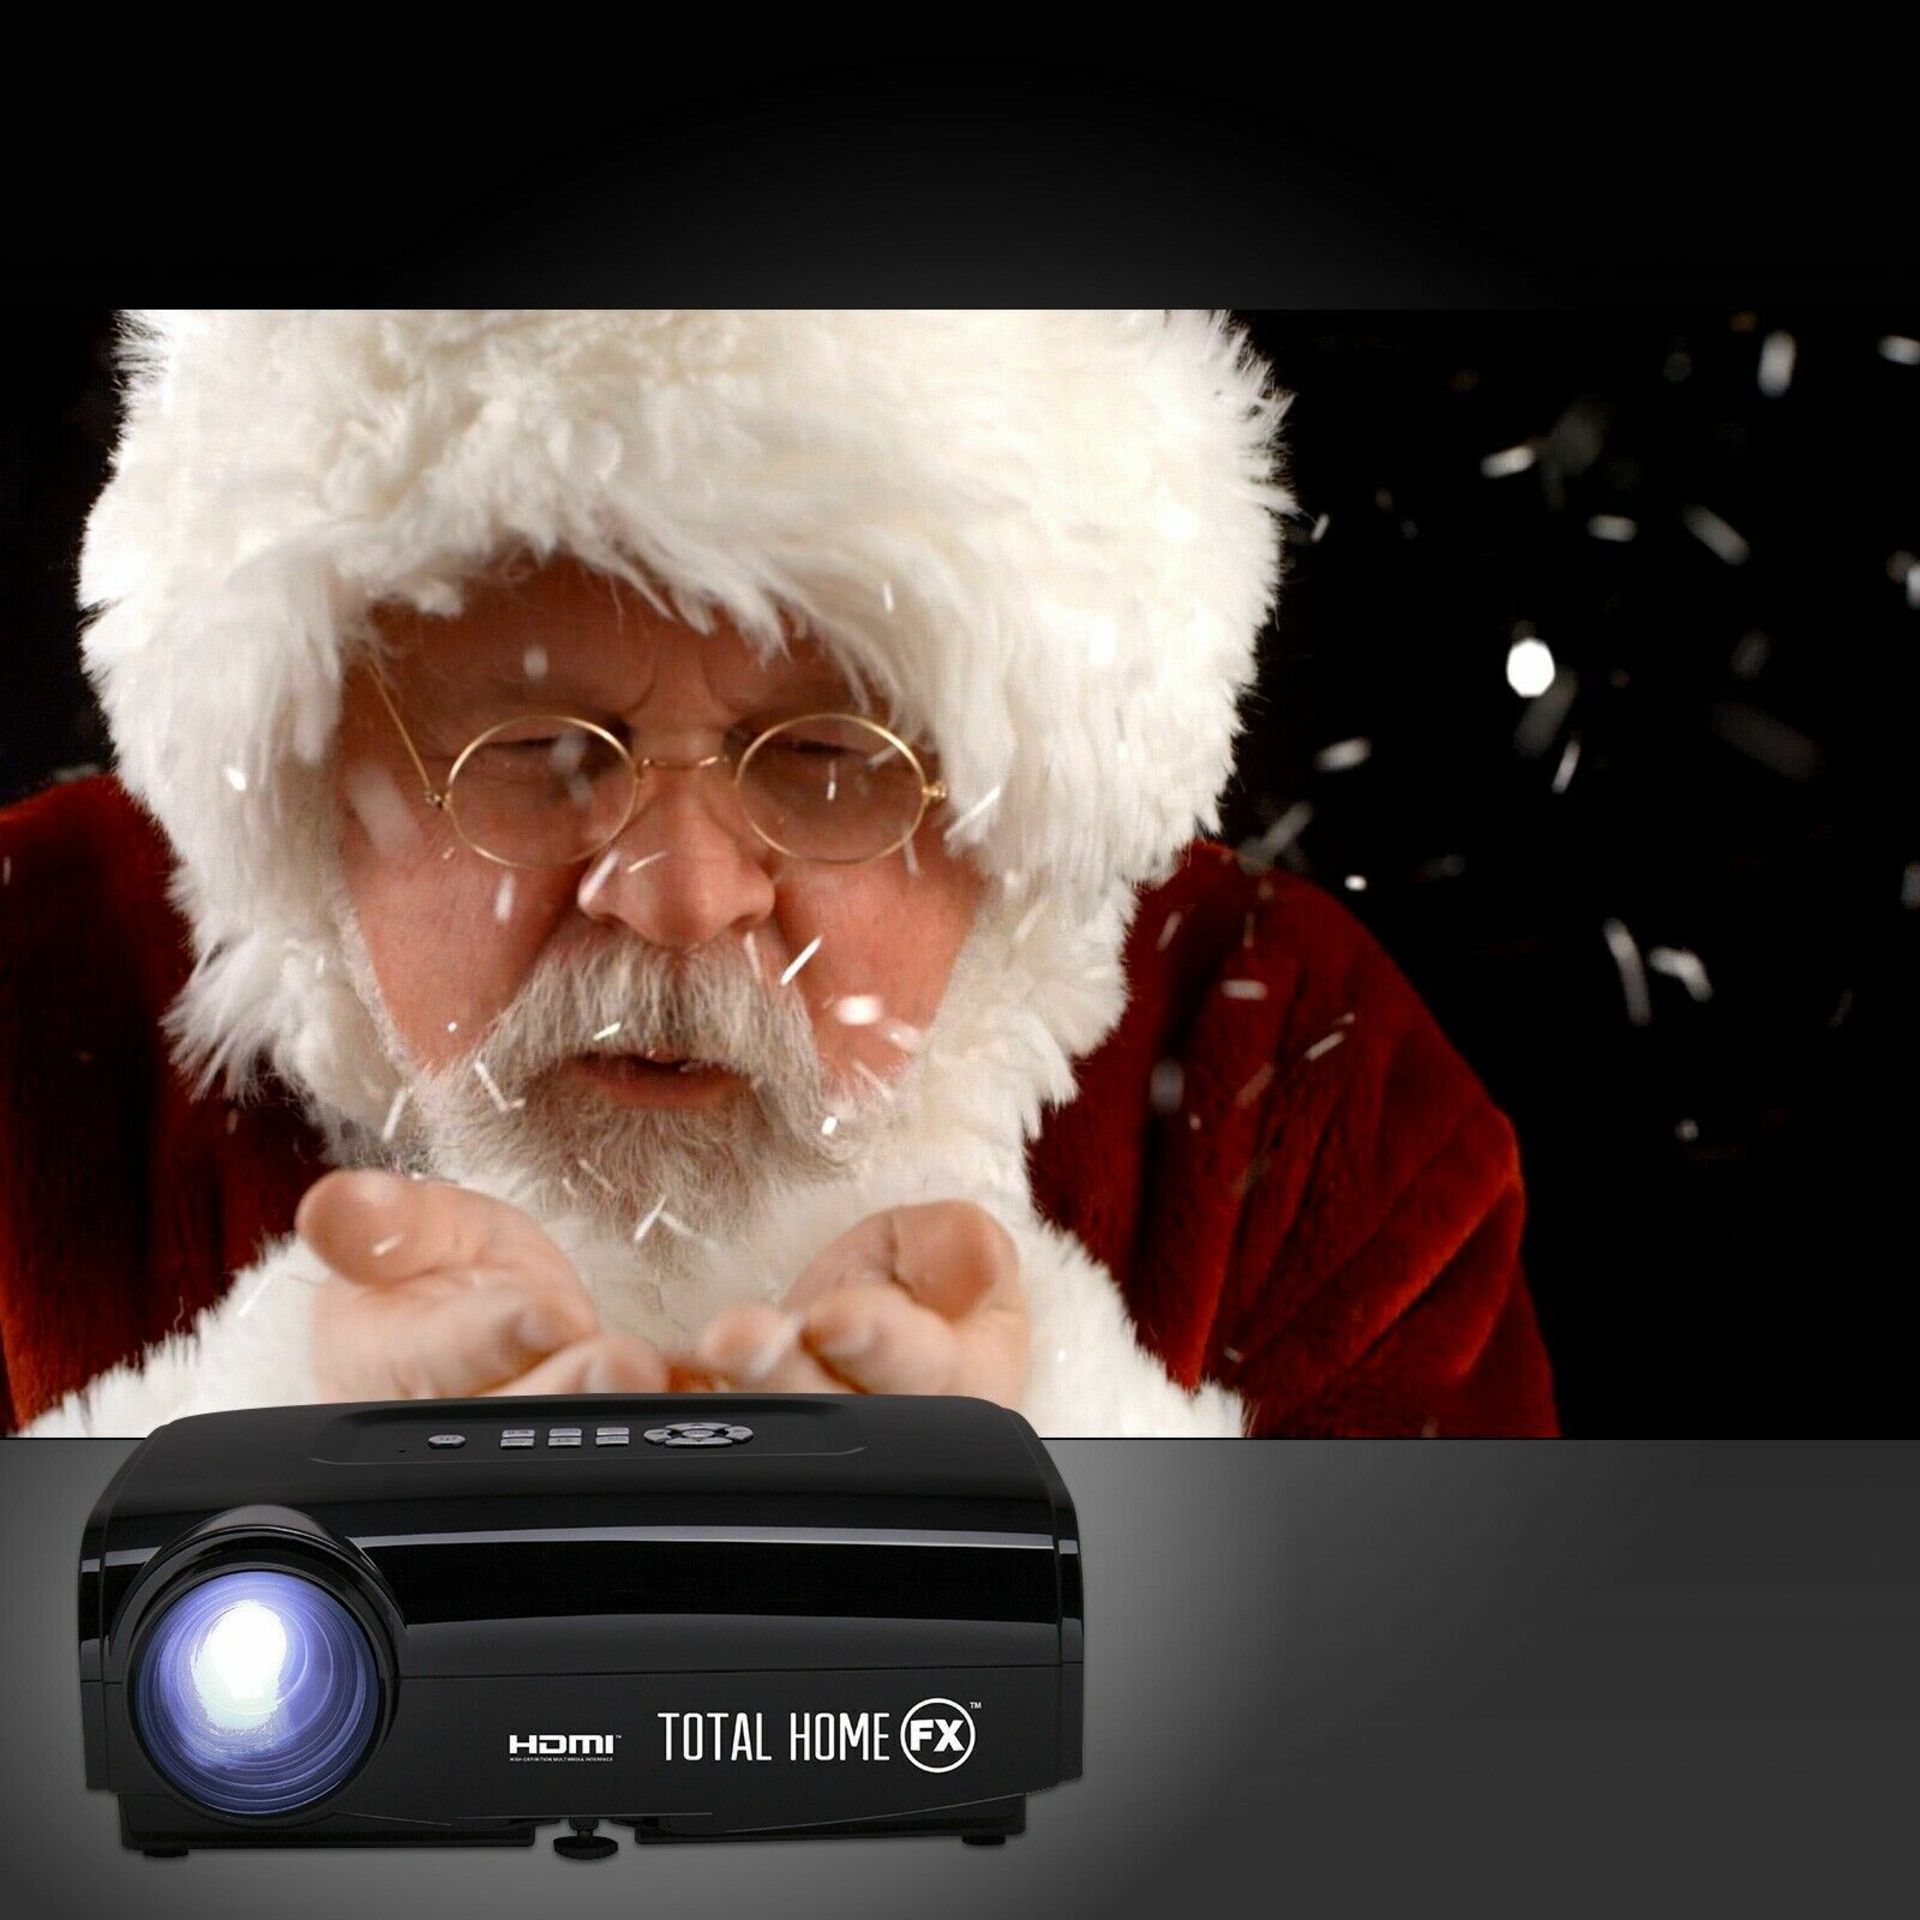 Total Home FX USB HDMI Projector 800 Series Halloween Christmas Window Display - Image 4 of 12